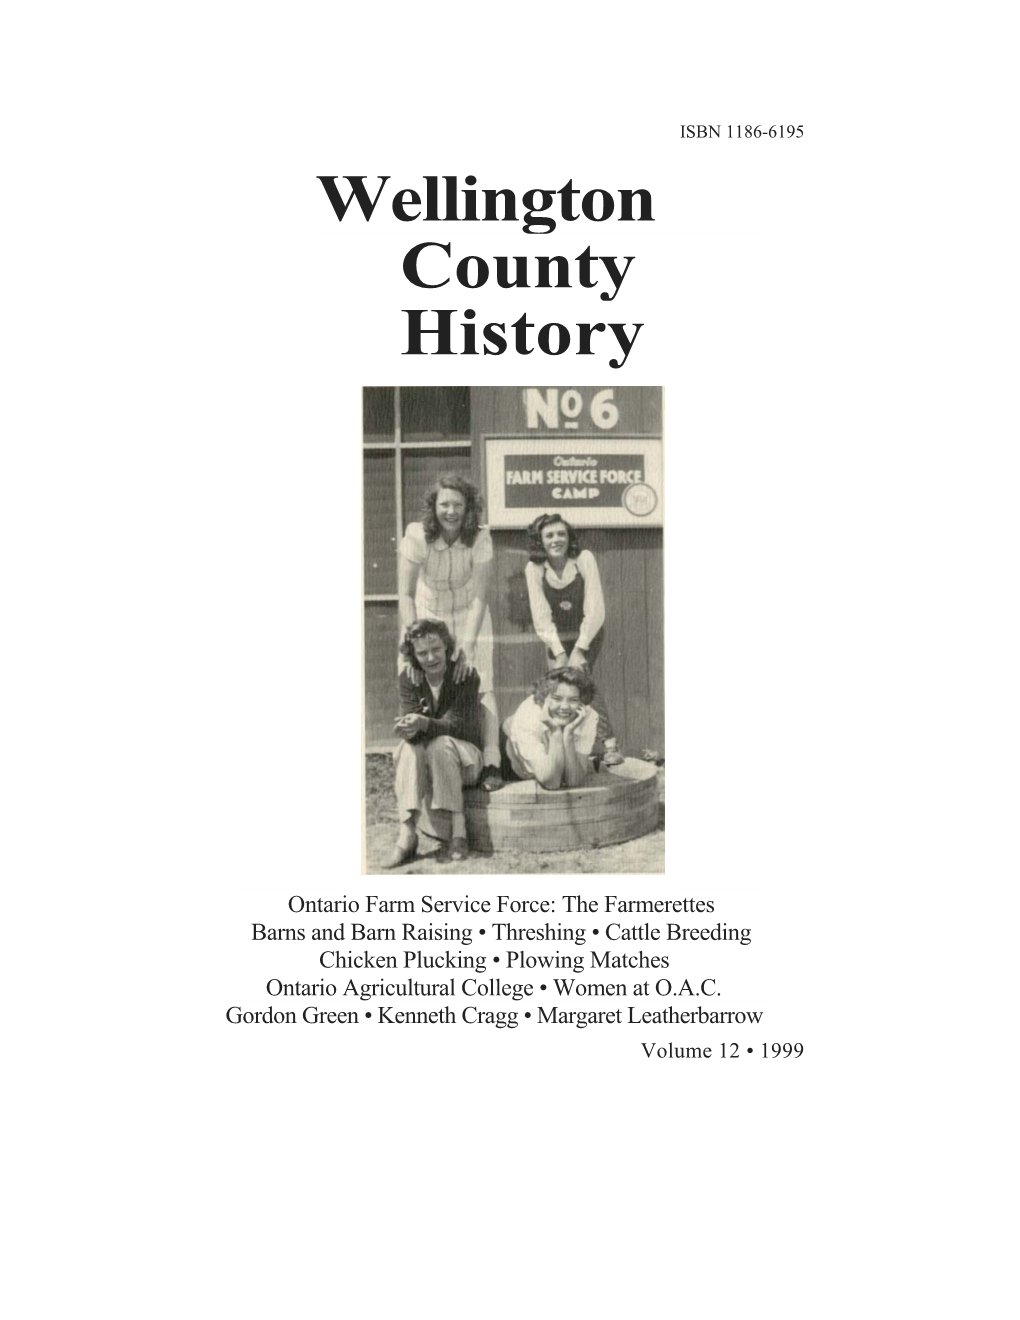 Wellington County History